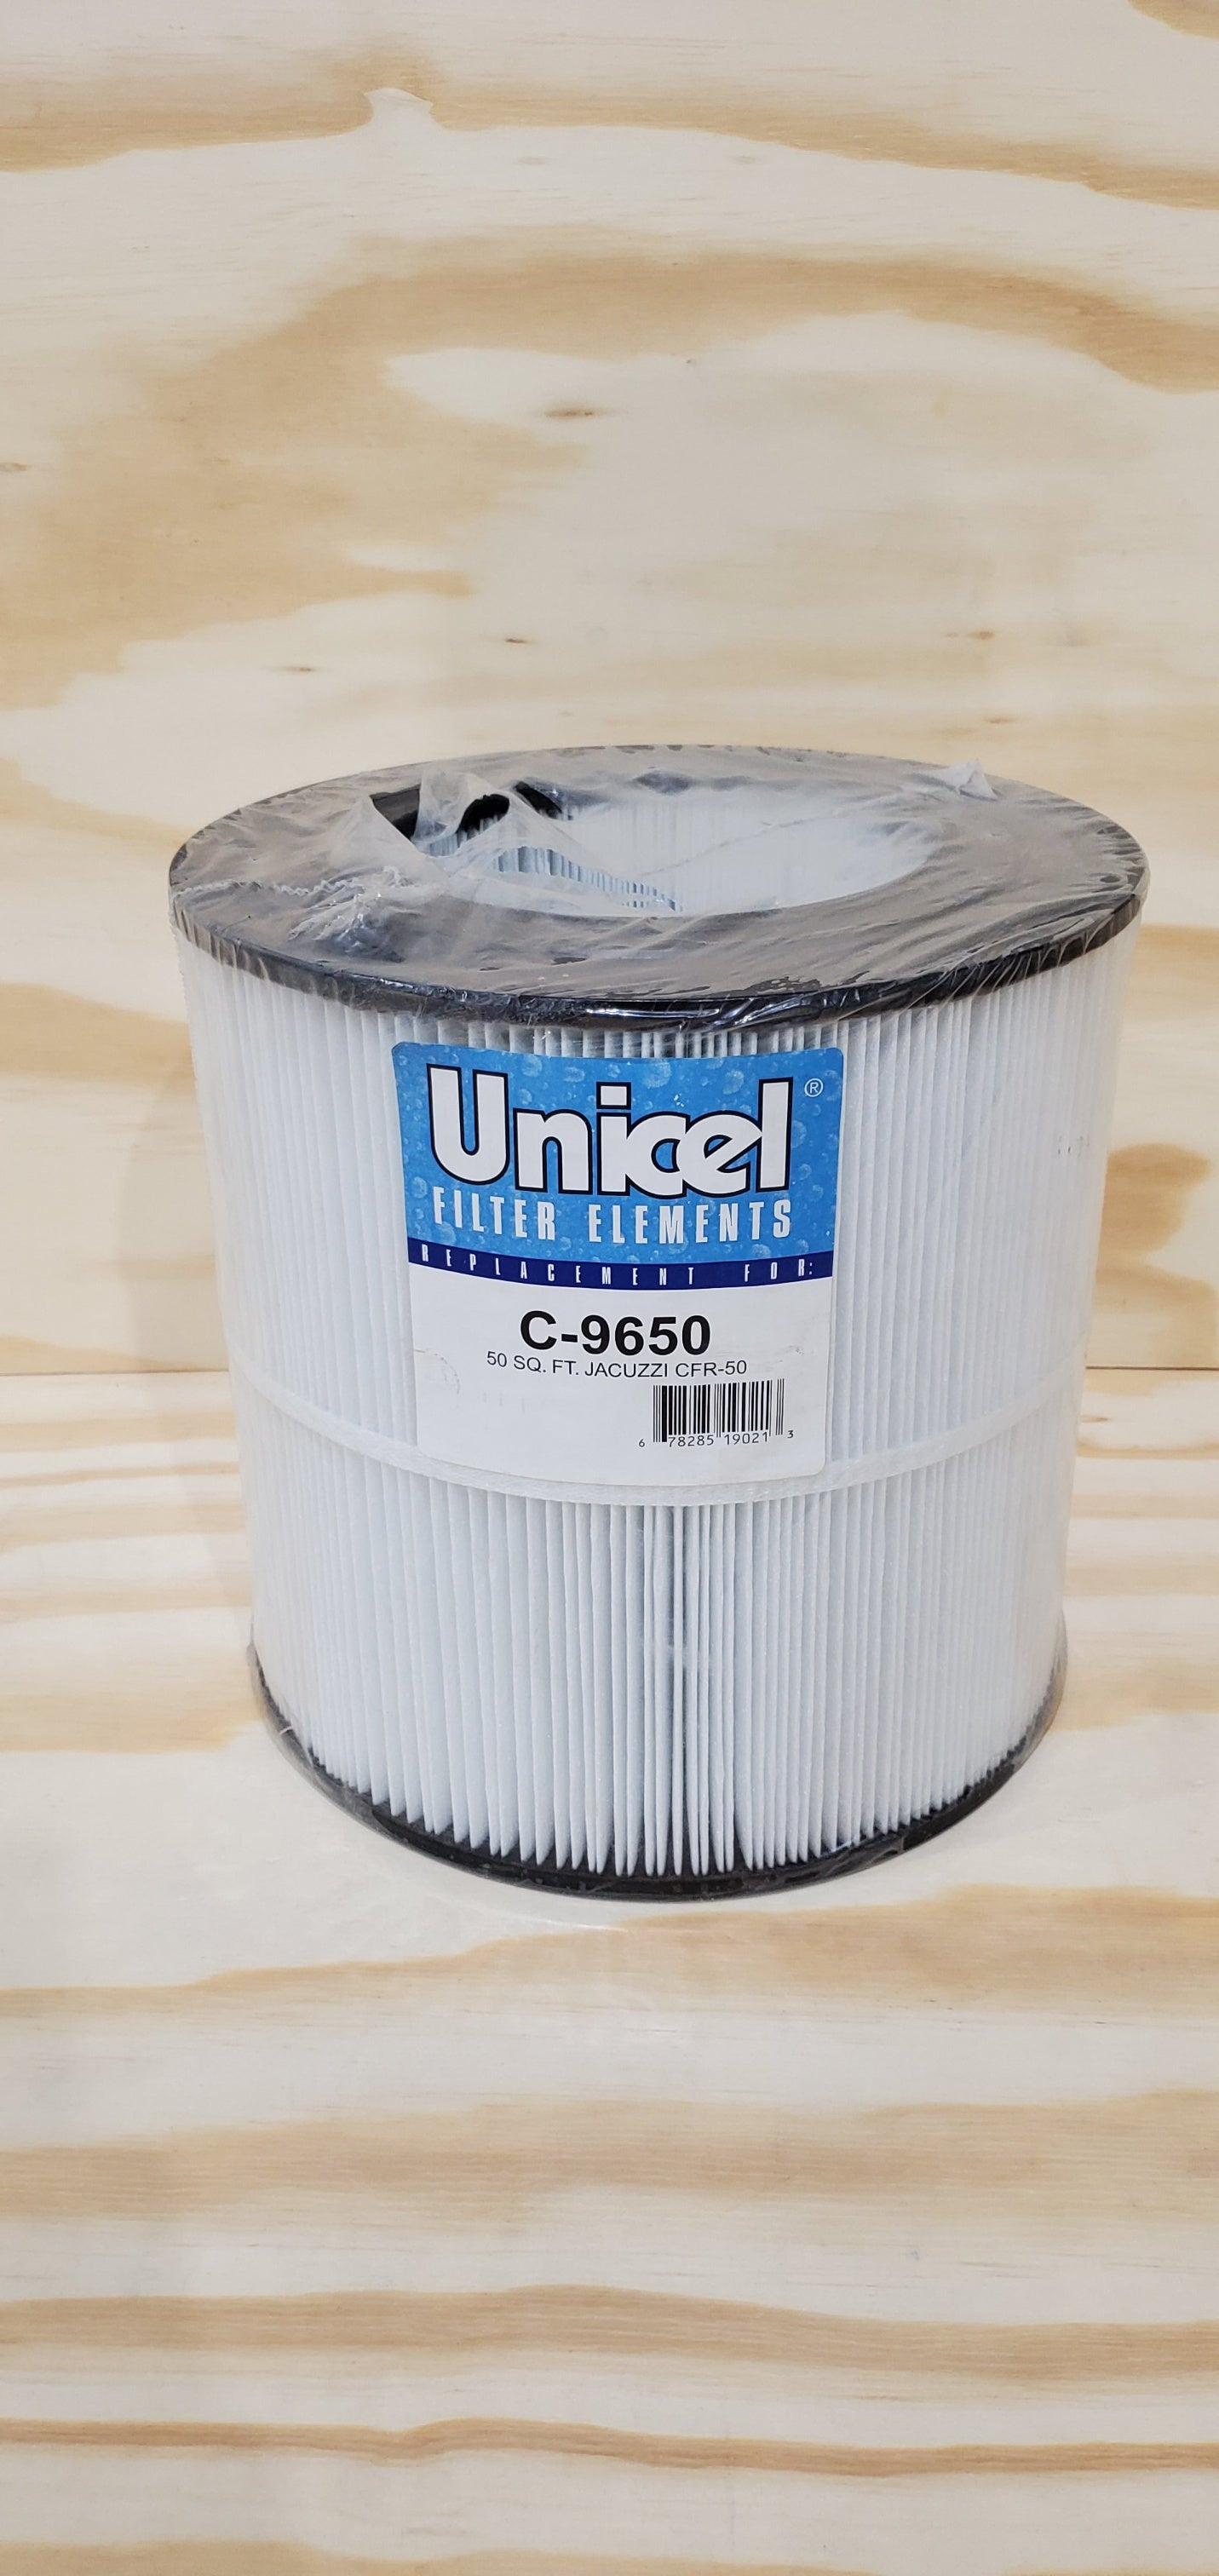 Unicel Filter Cartridge C-9650